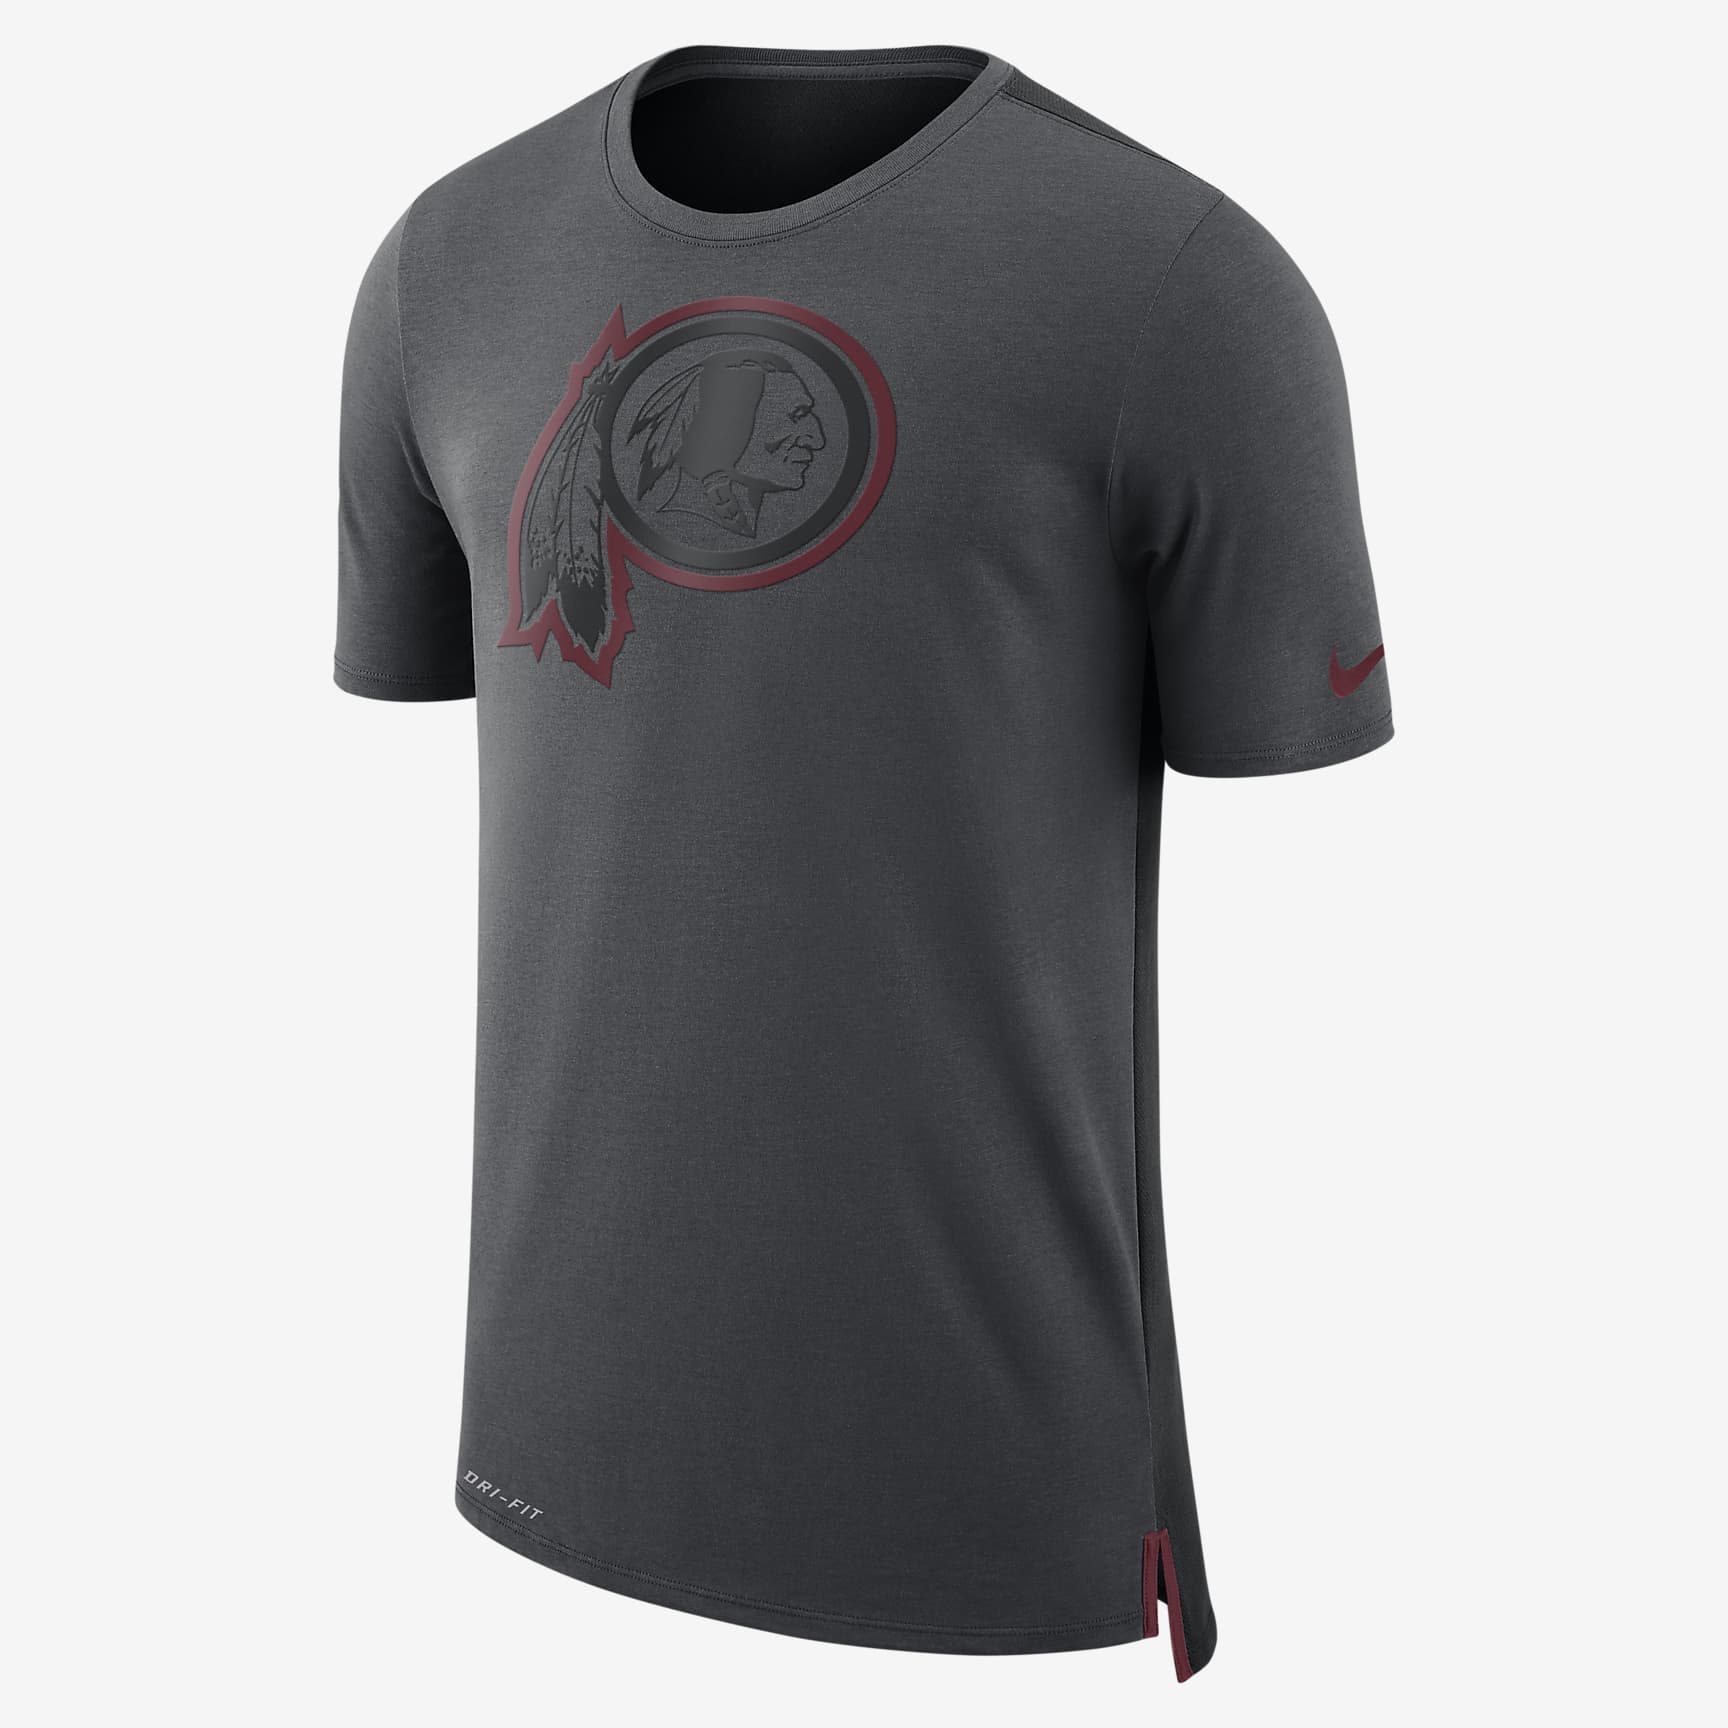 Nike Dry Travel (NFL Redskins) Men's T-Shirt. Nike BG